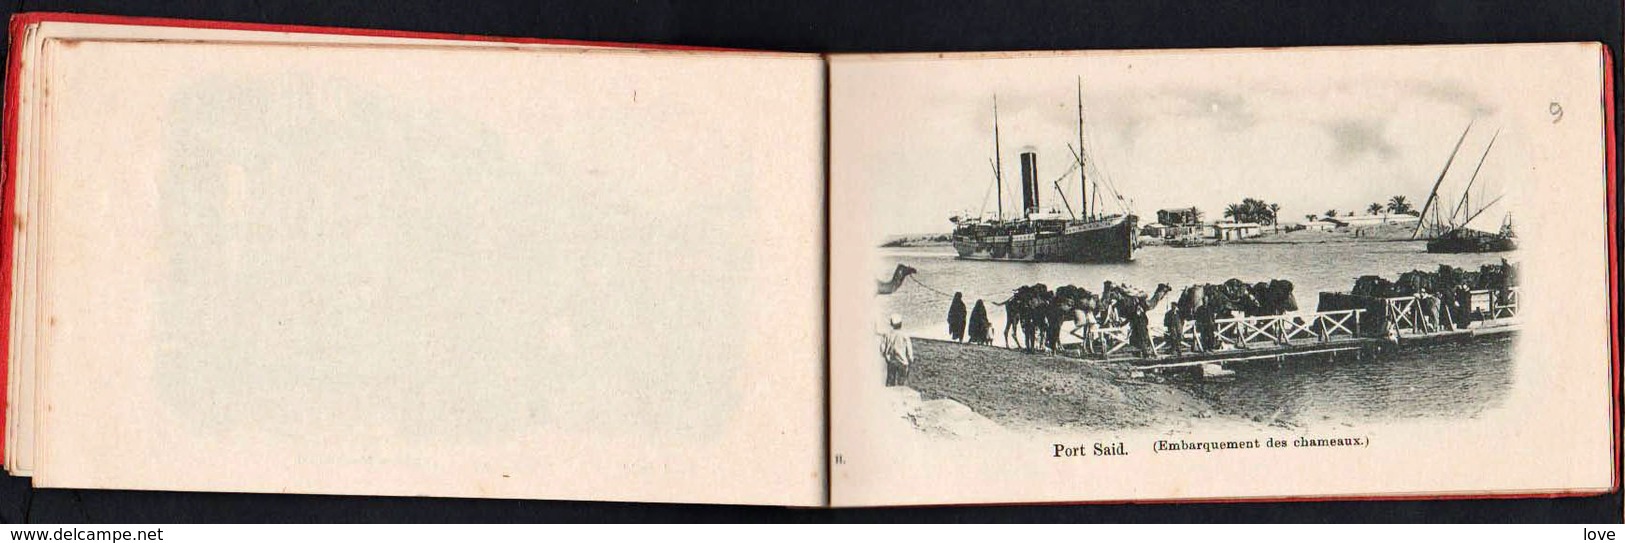 PORT SAID (Egypte) Carnet complet contenant 15 belles vues de Port Saïd (1890/1900)